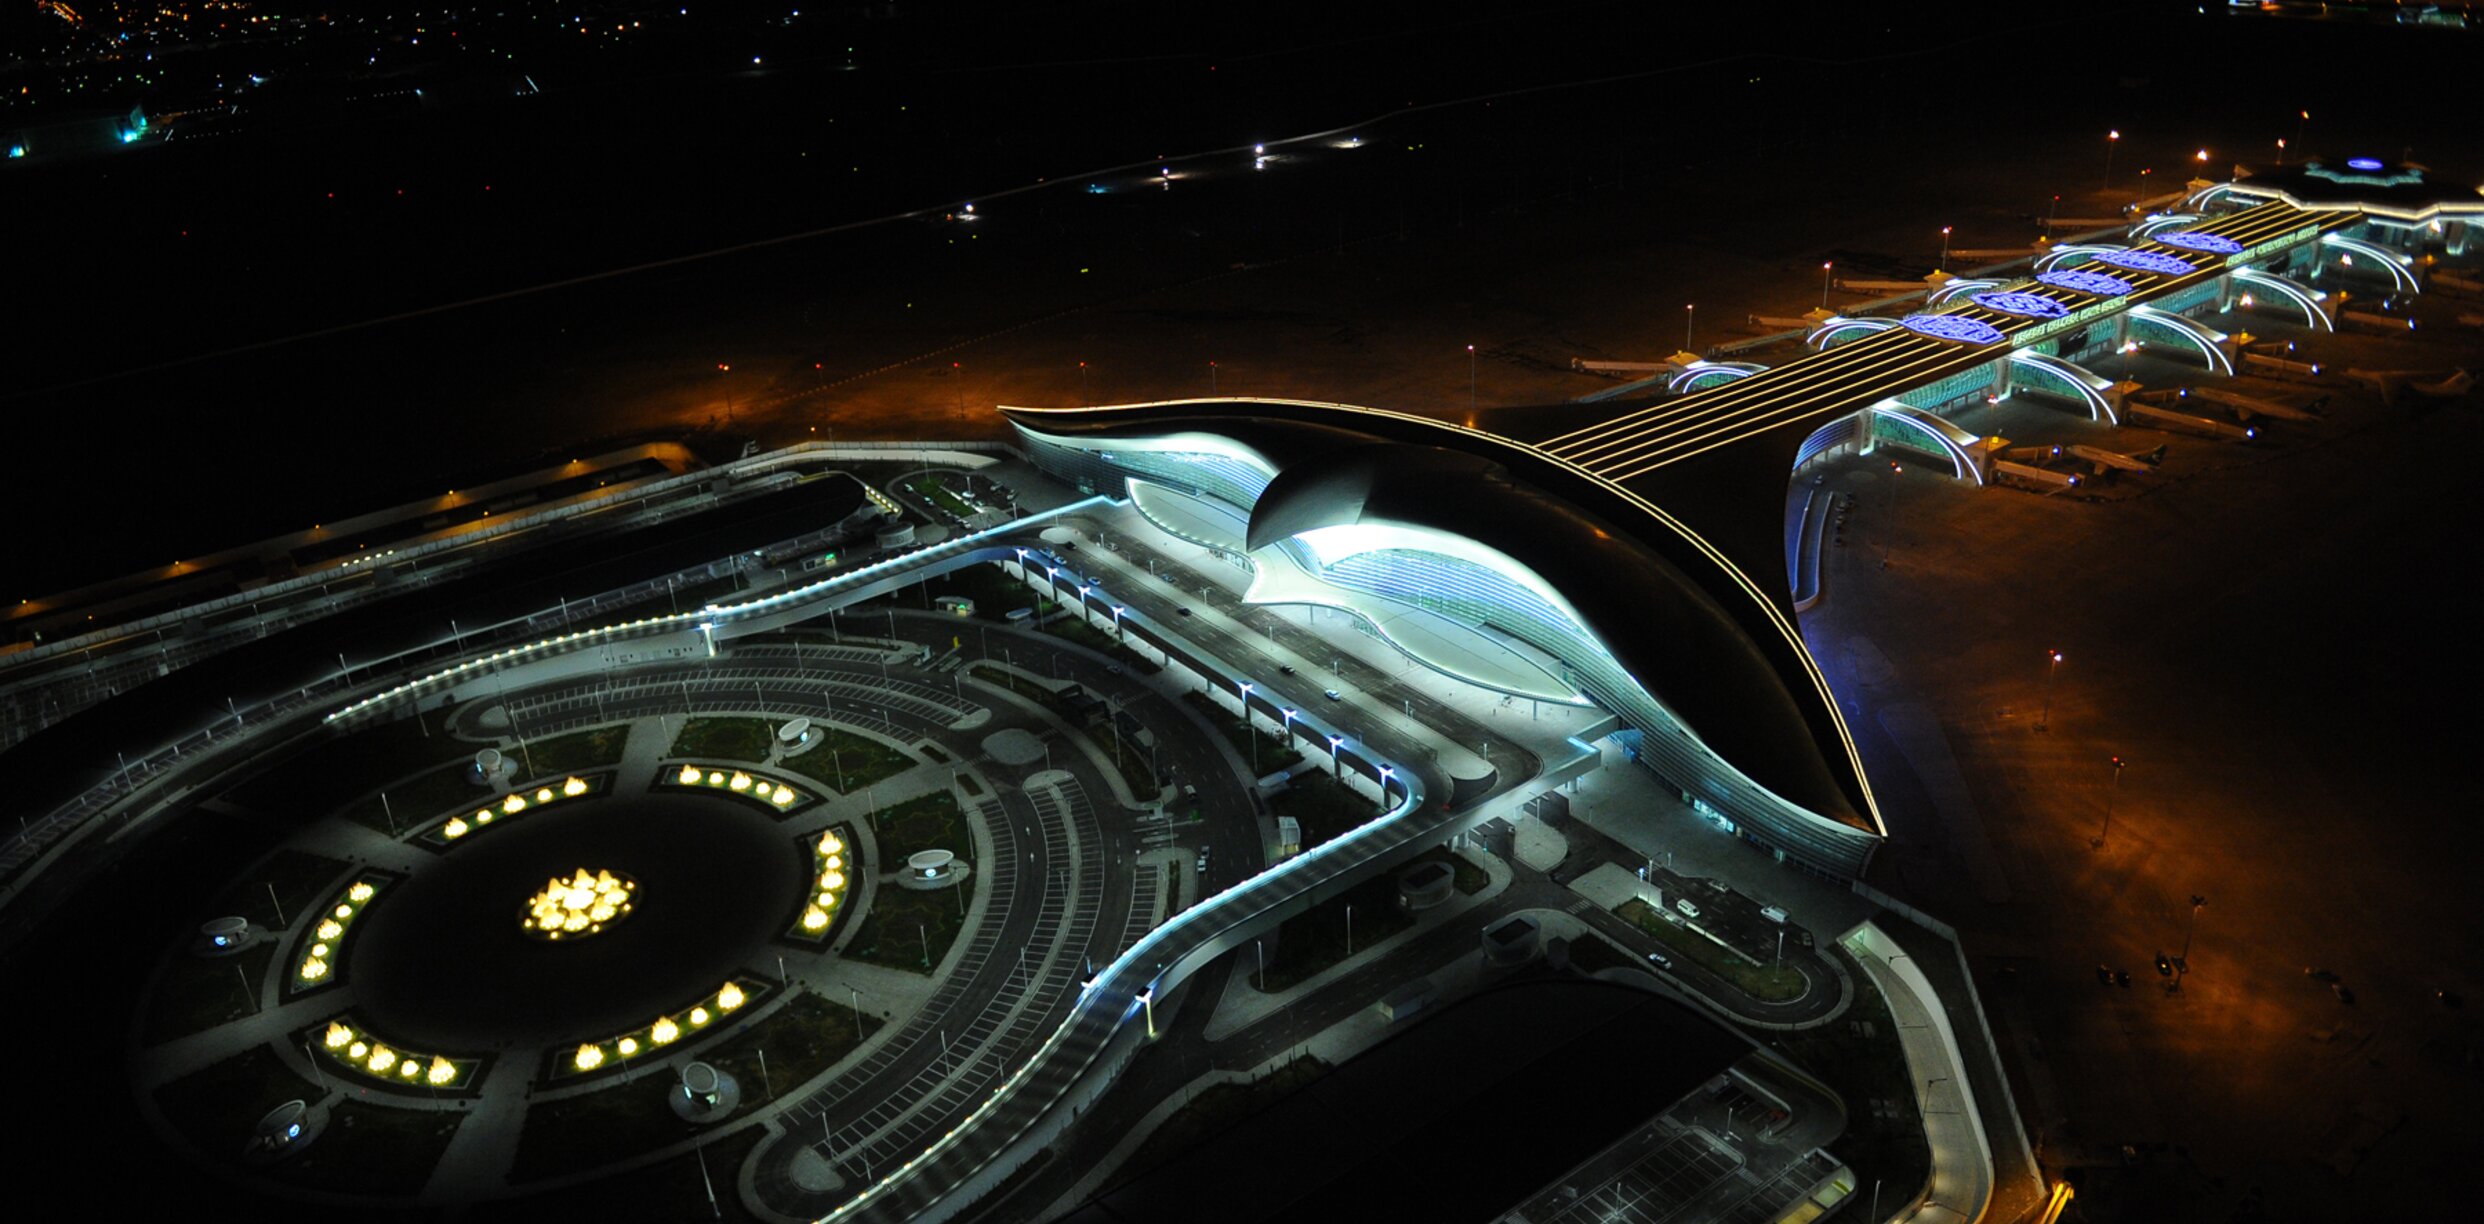 Referenzbild "Ashgabat Airport"; Fassadentechnik aus Aluminium